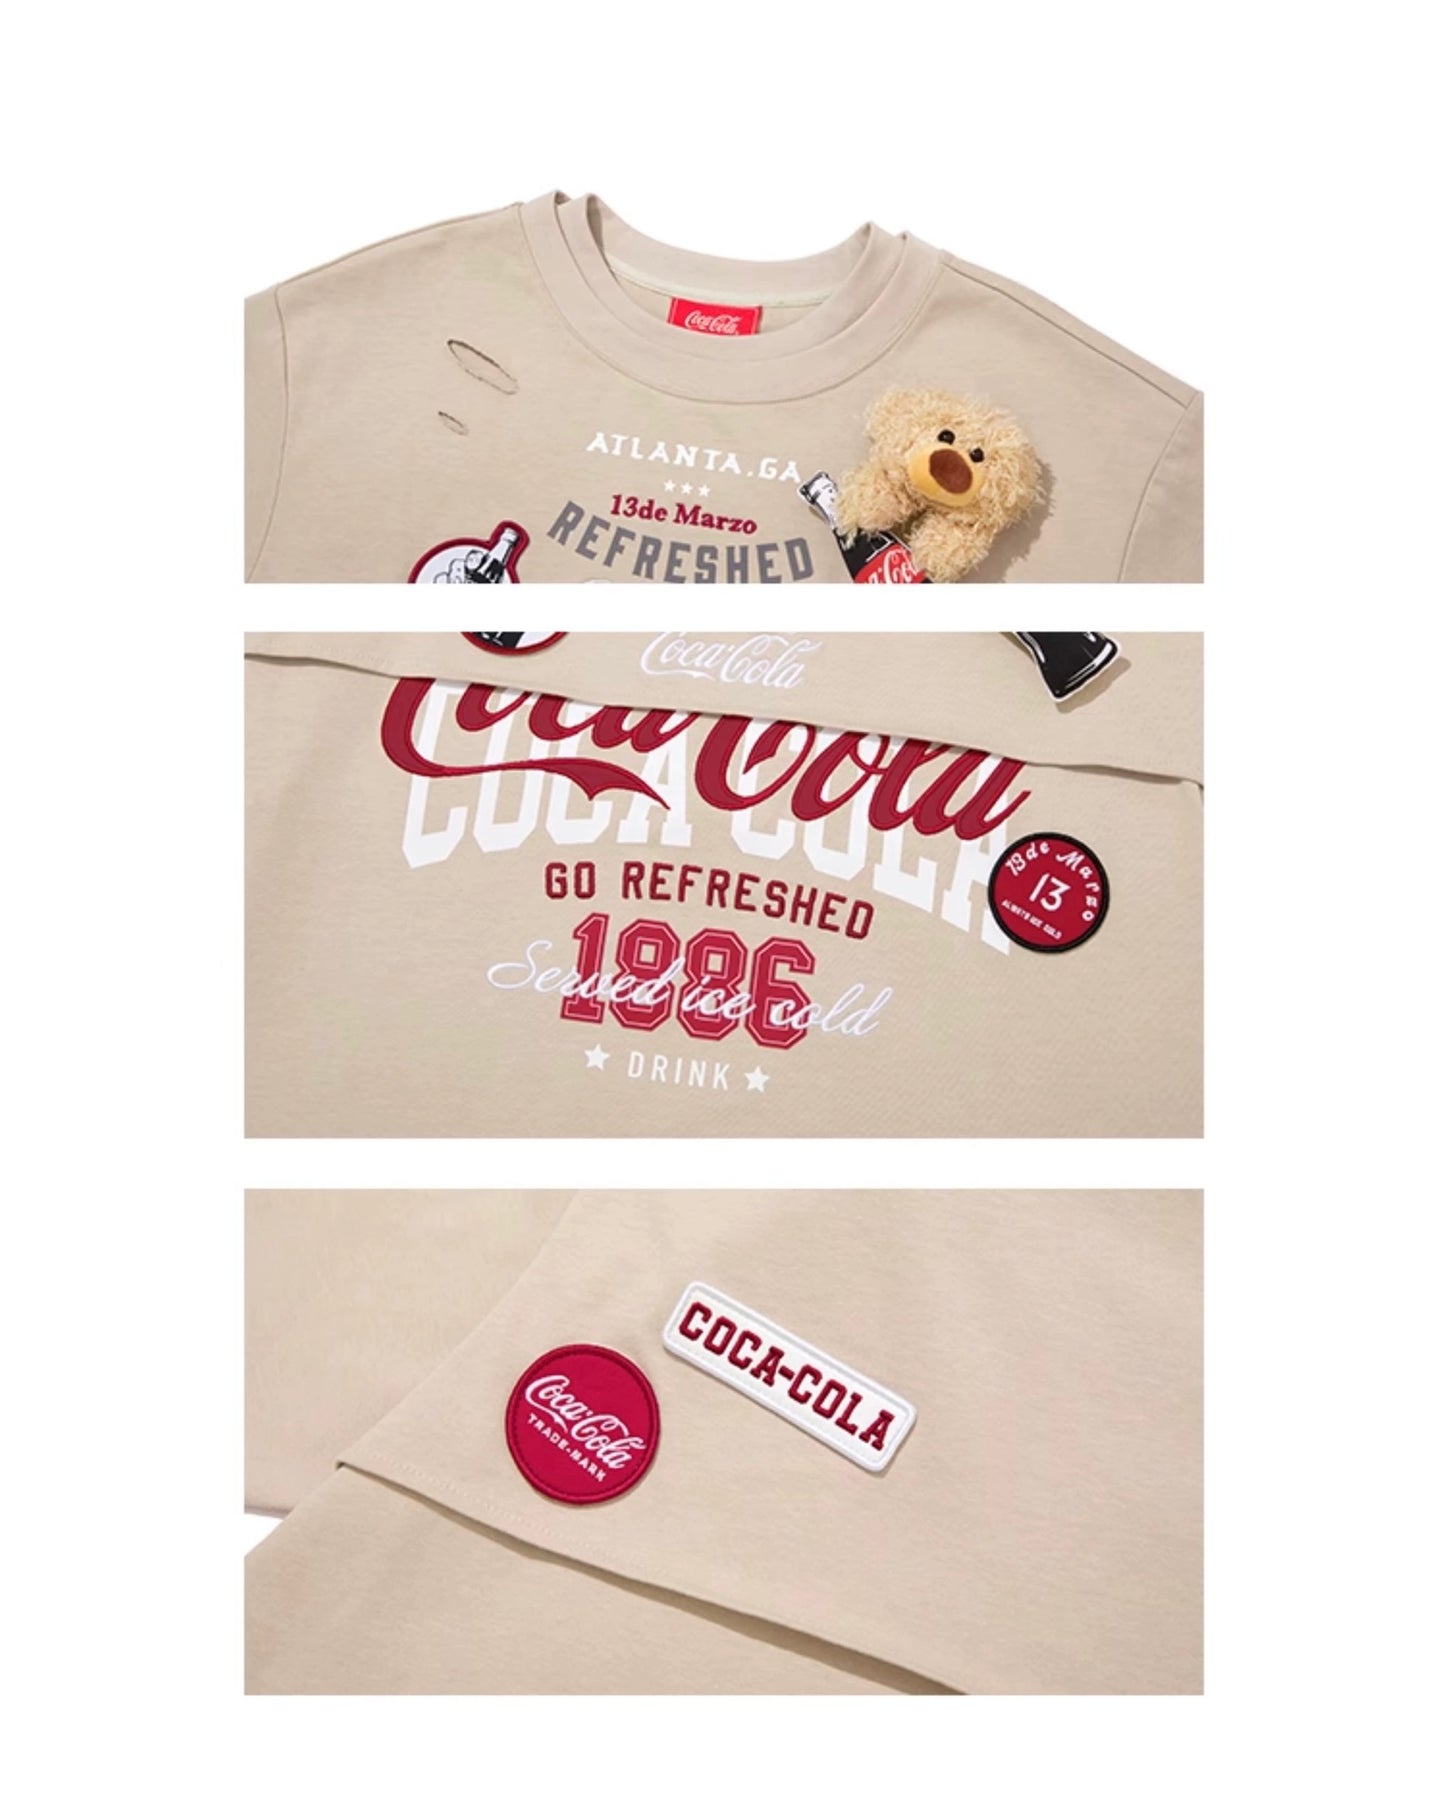 13DE MARZO x Coca-Cola Bear Layered Logo T-shirt Khaki